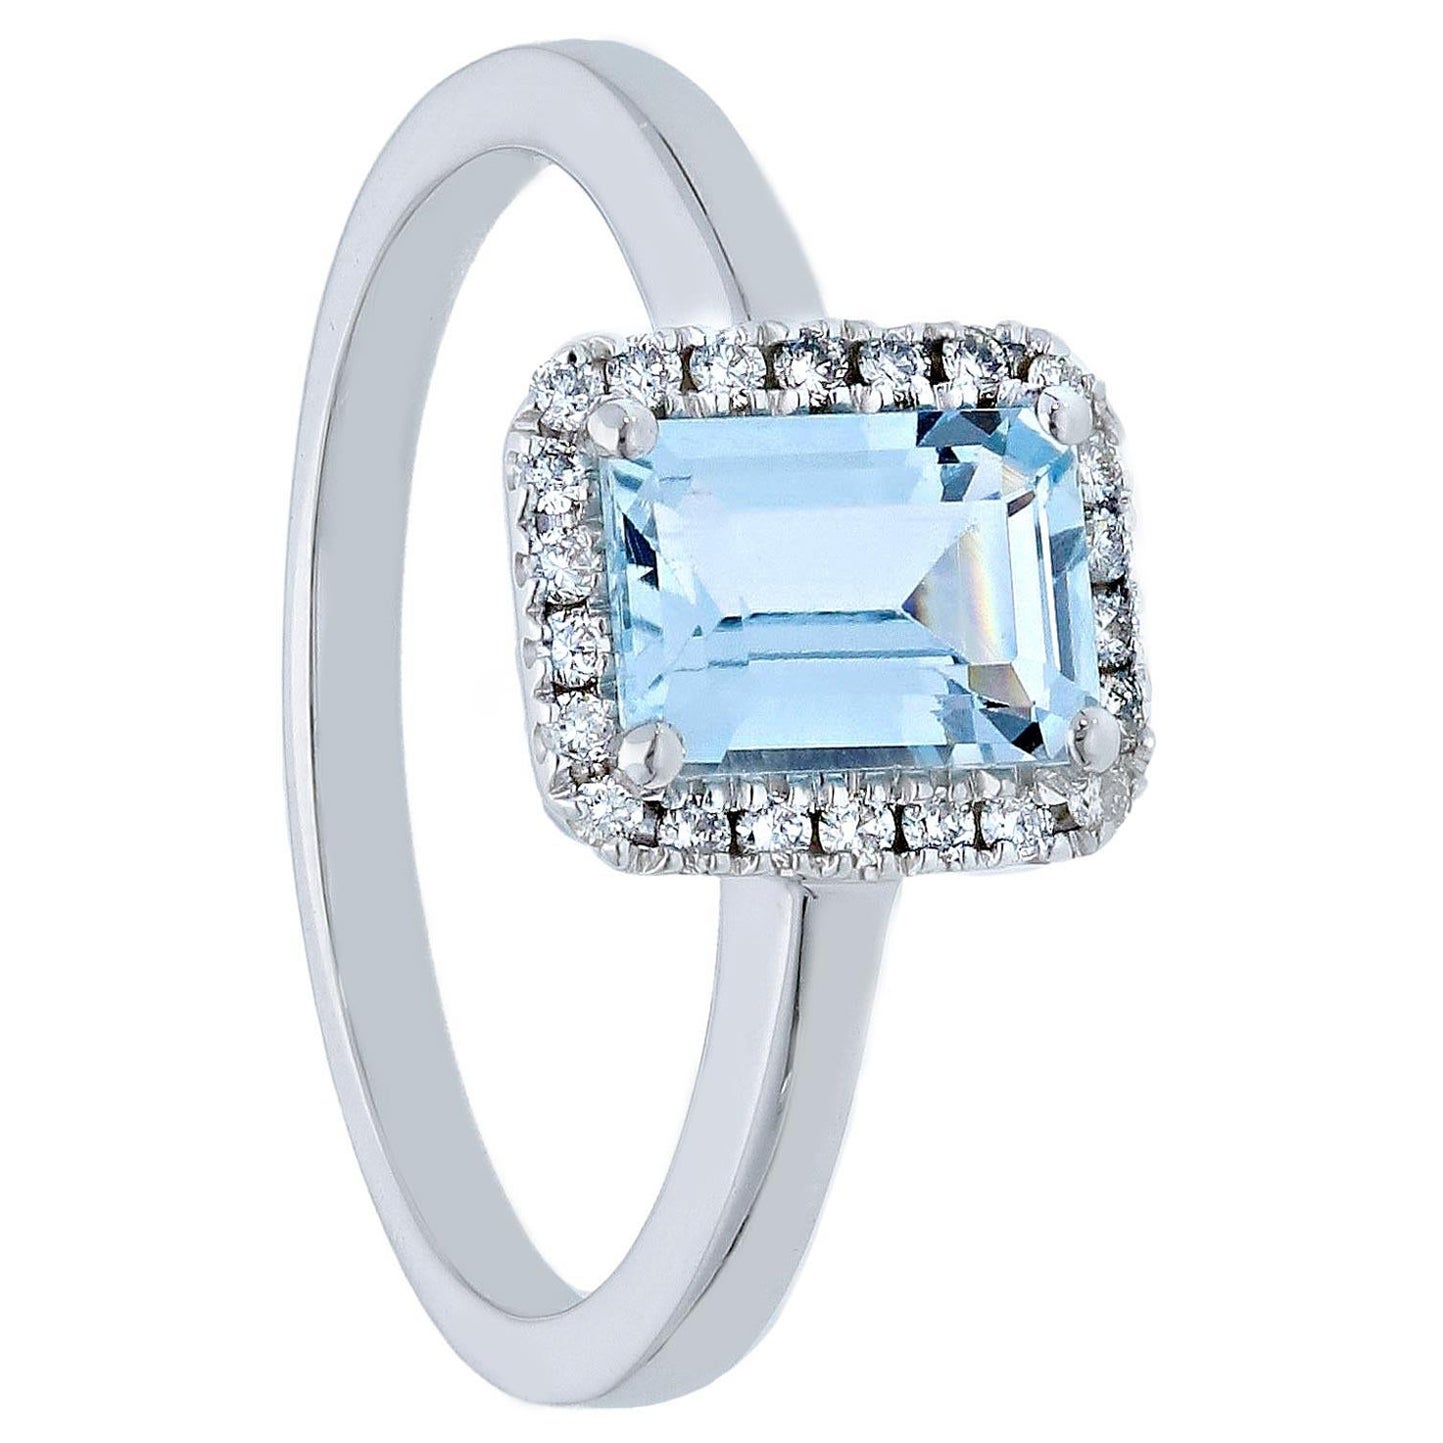 18K White Gold Pradera Colourful Engagement Ring with Aquamarina and Diamonds